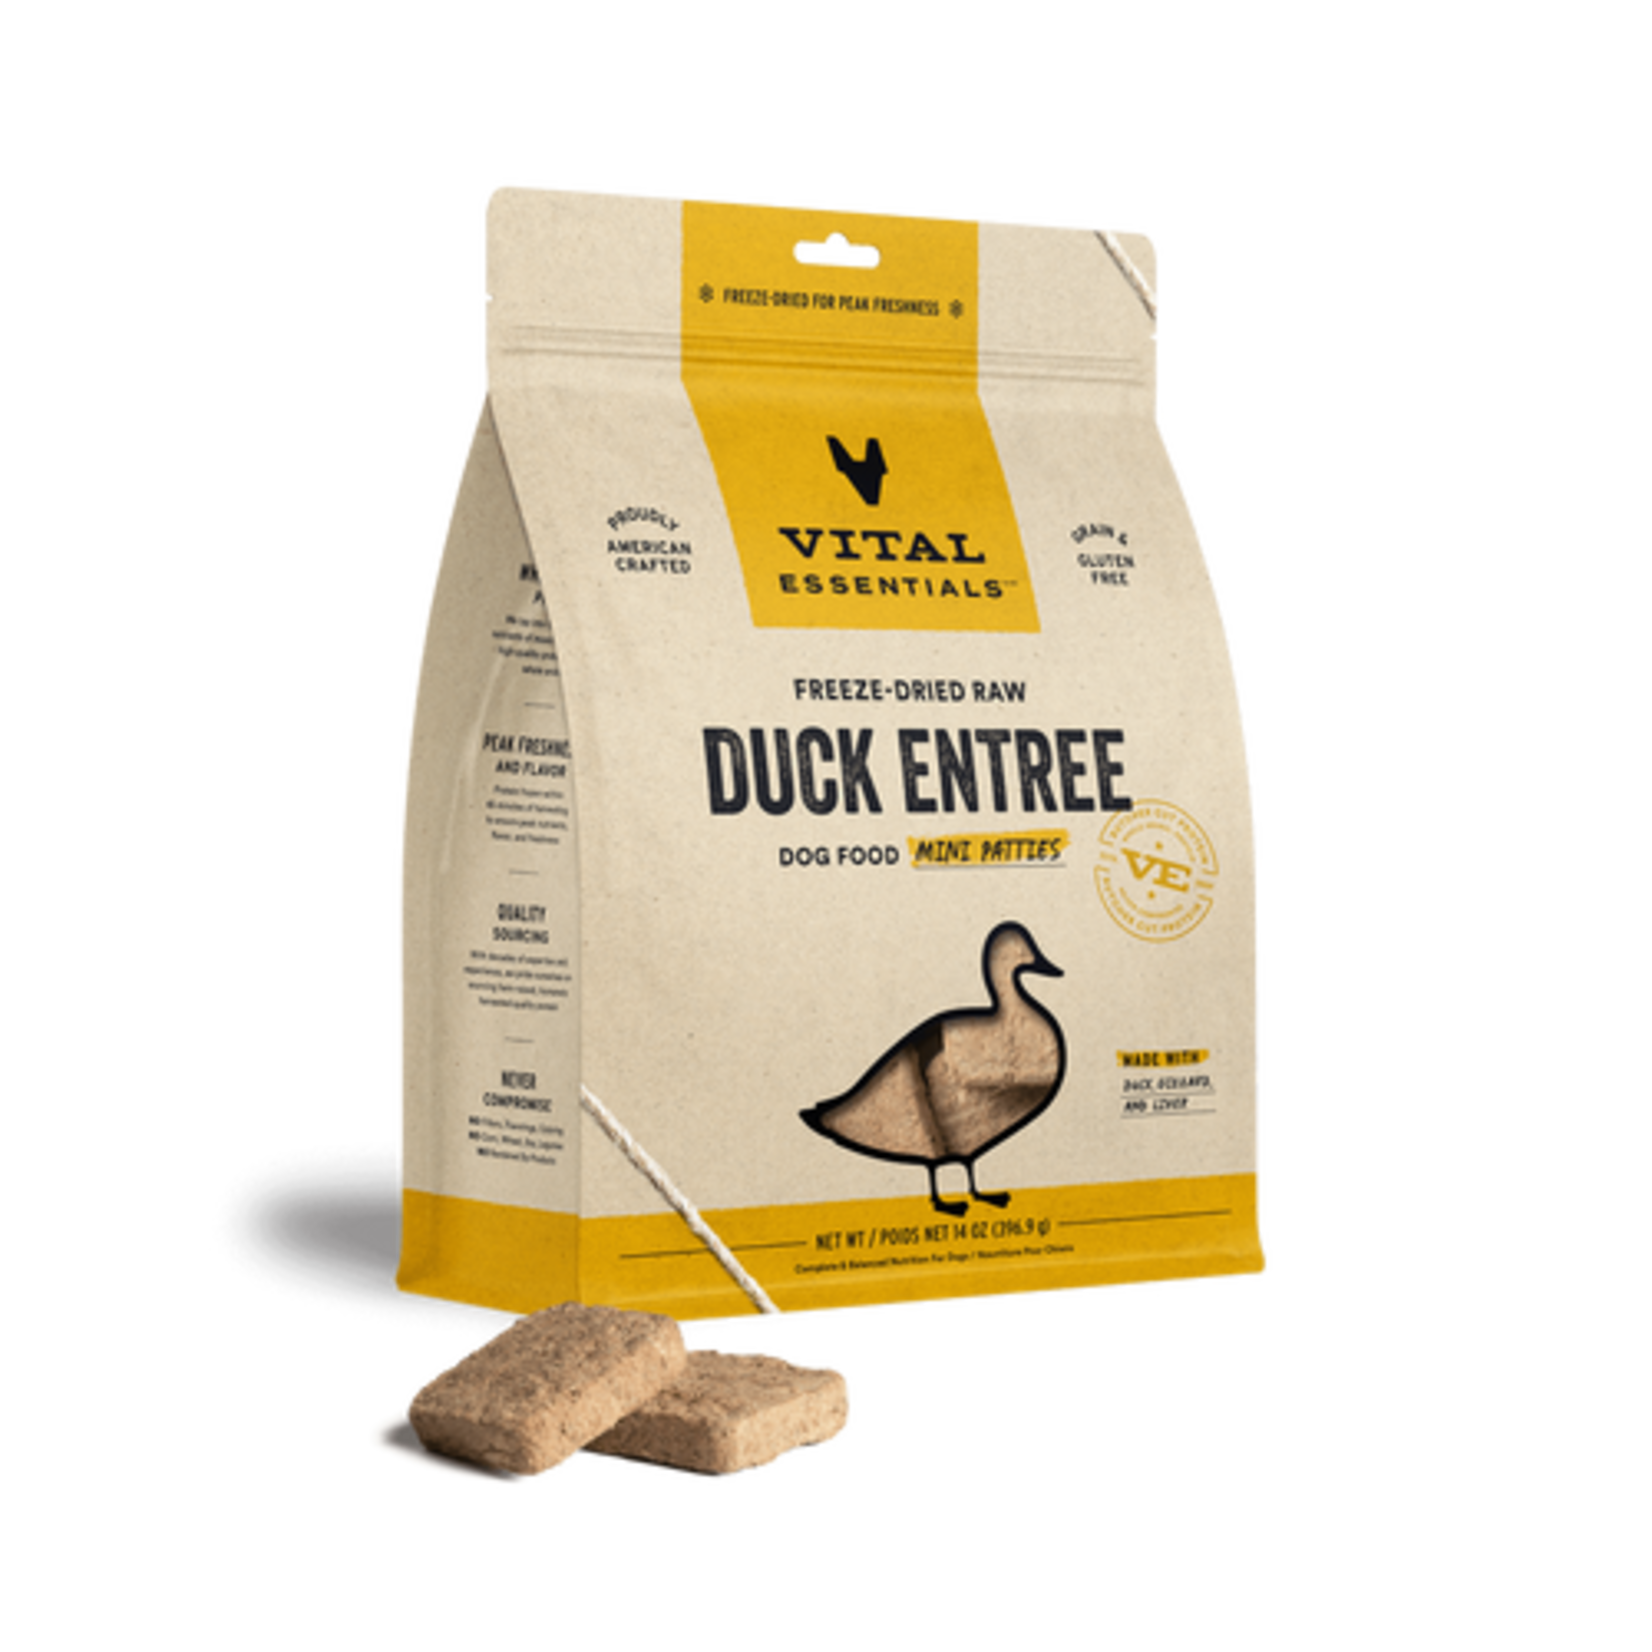 Vital Essentials Vital Essentials Duck Patties for Dogs Freeze-Dried Grain Free 14oz NEW LOWER PRICE